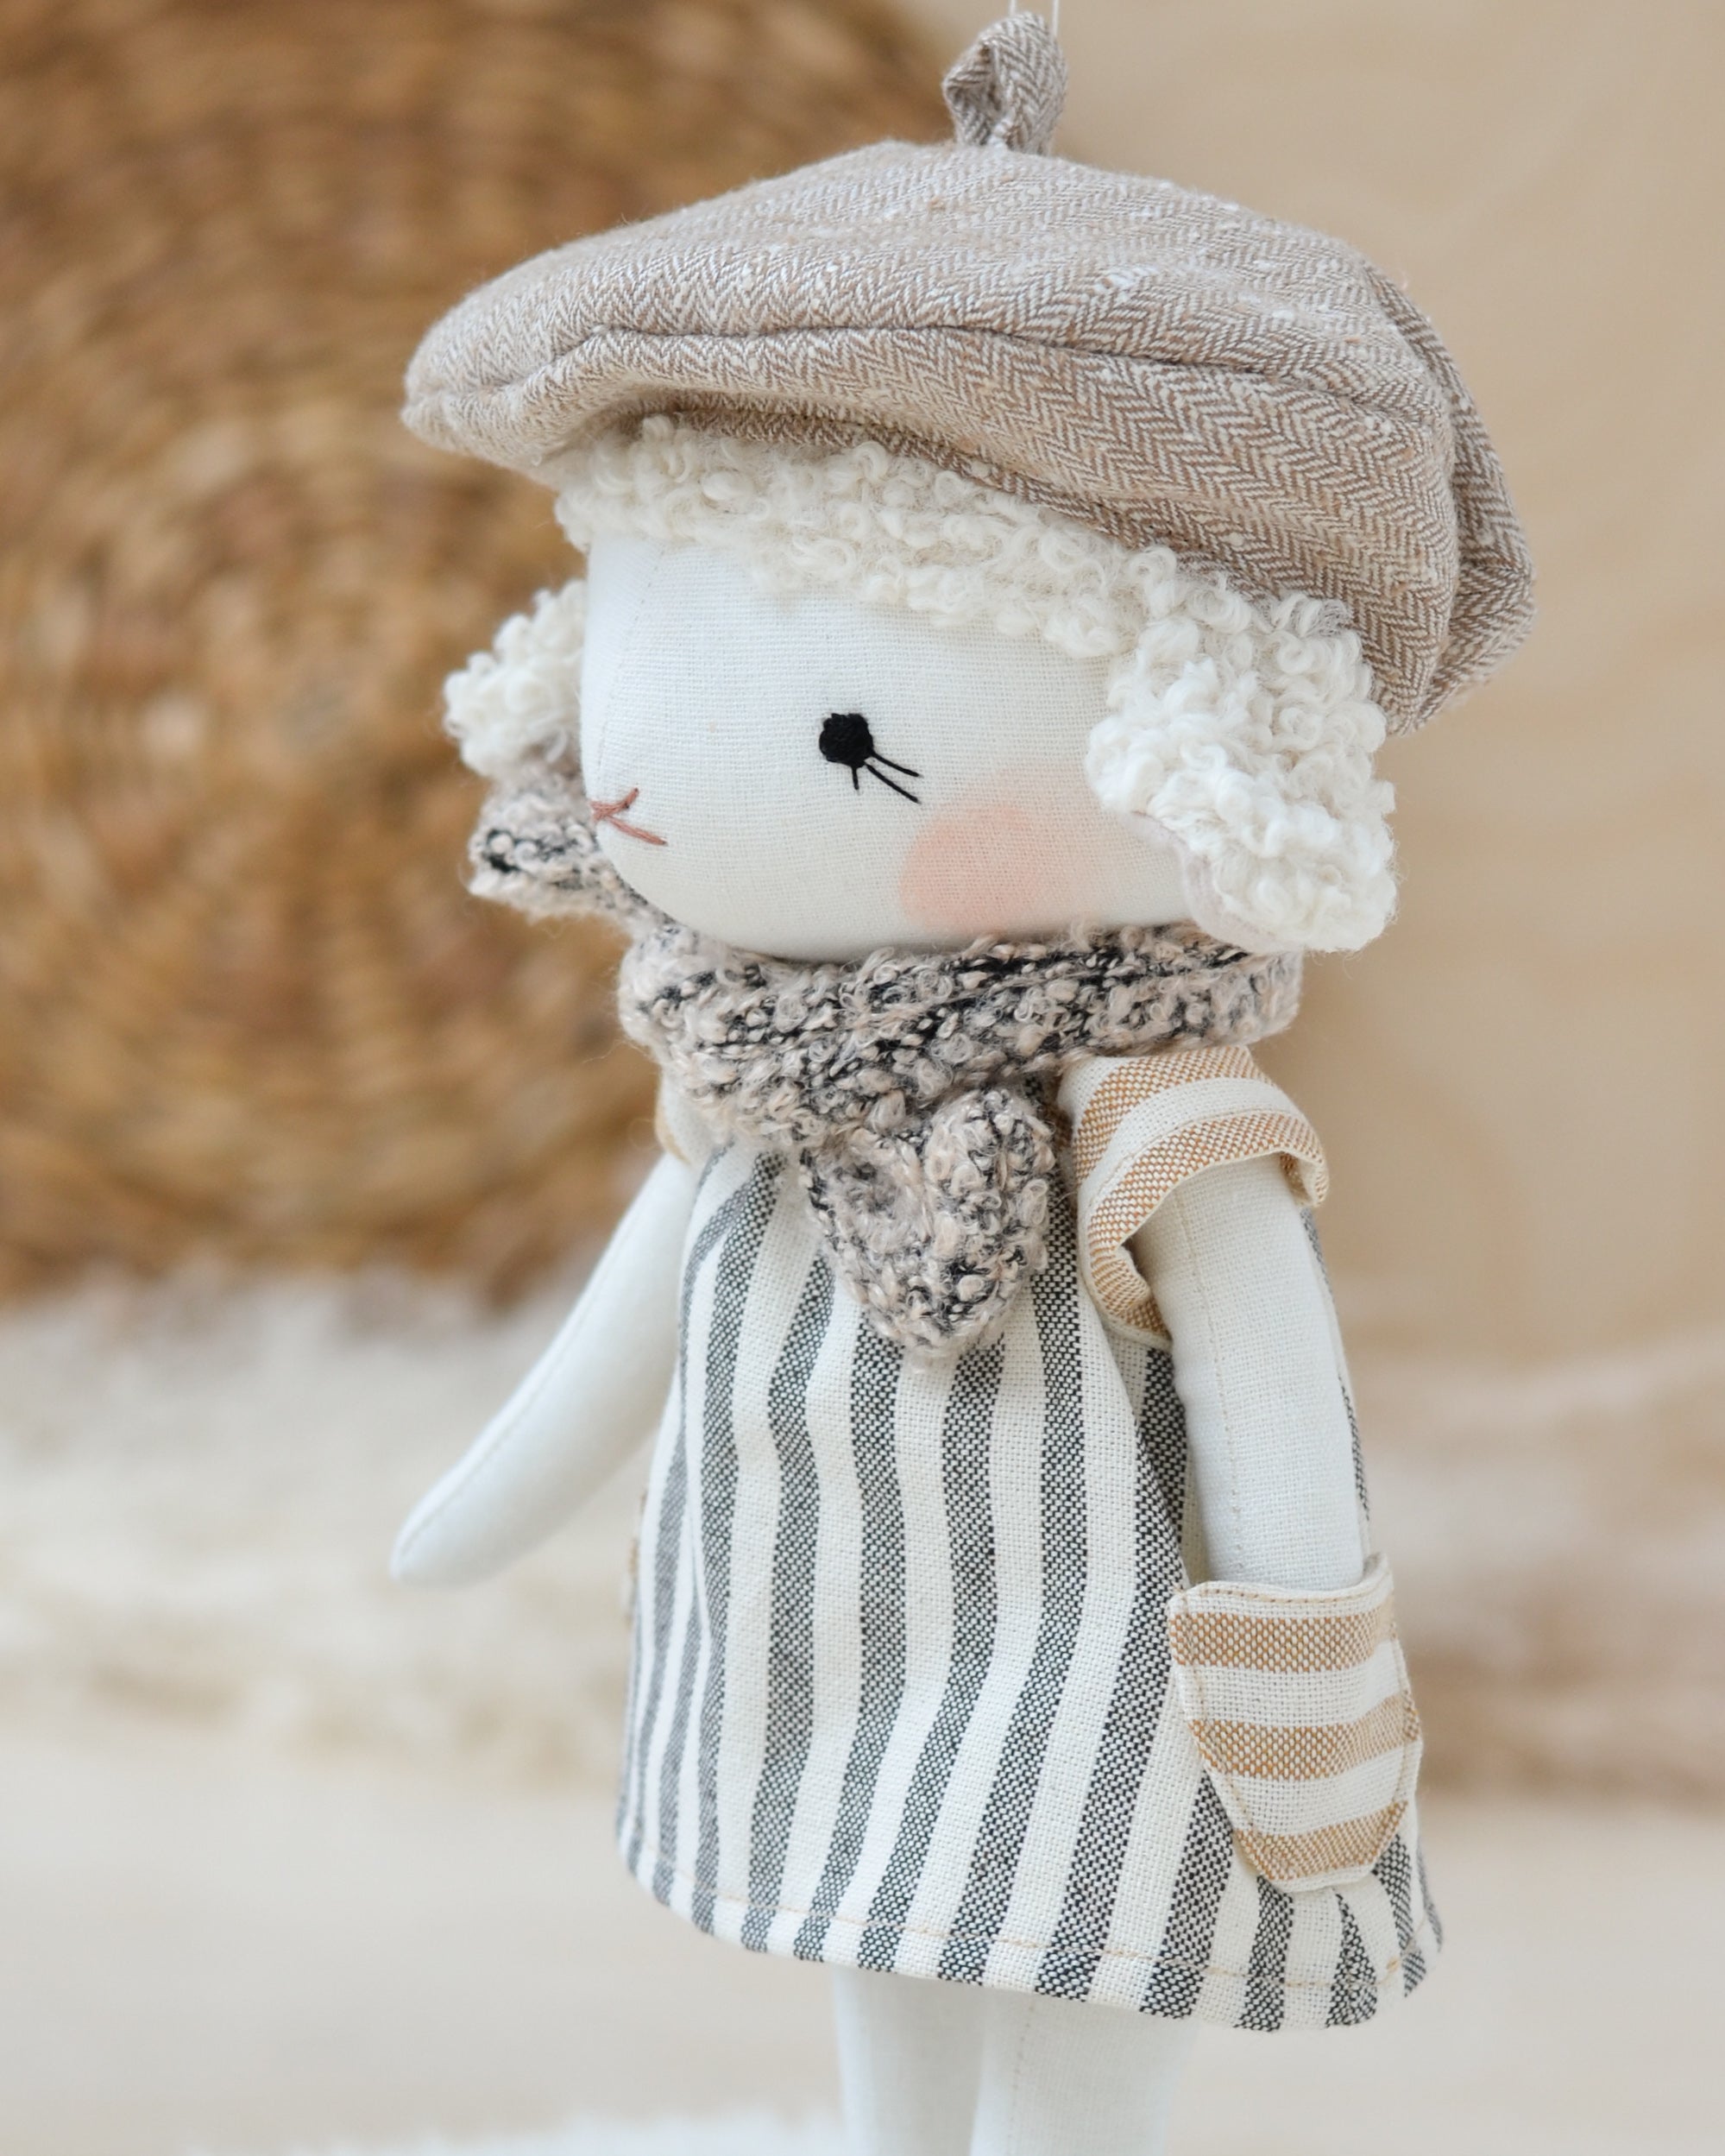 Sewing Pattern - Sheep doll